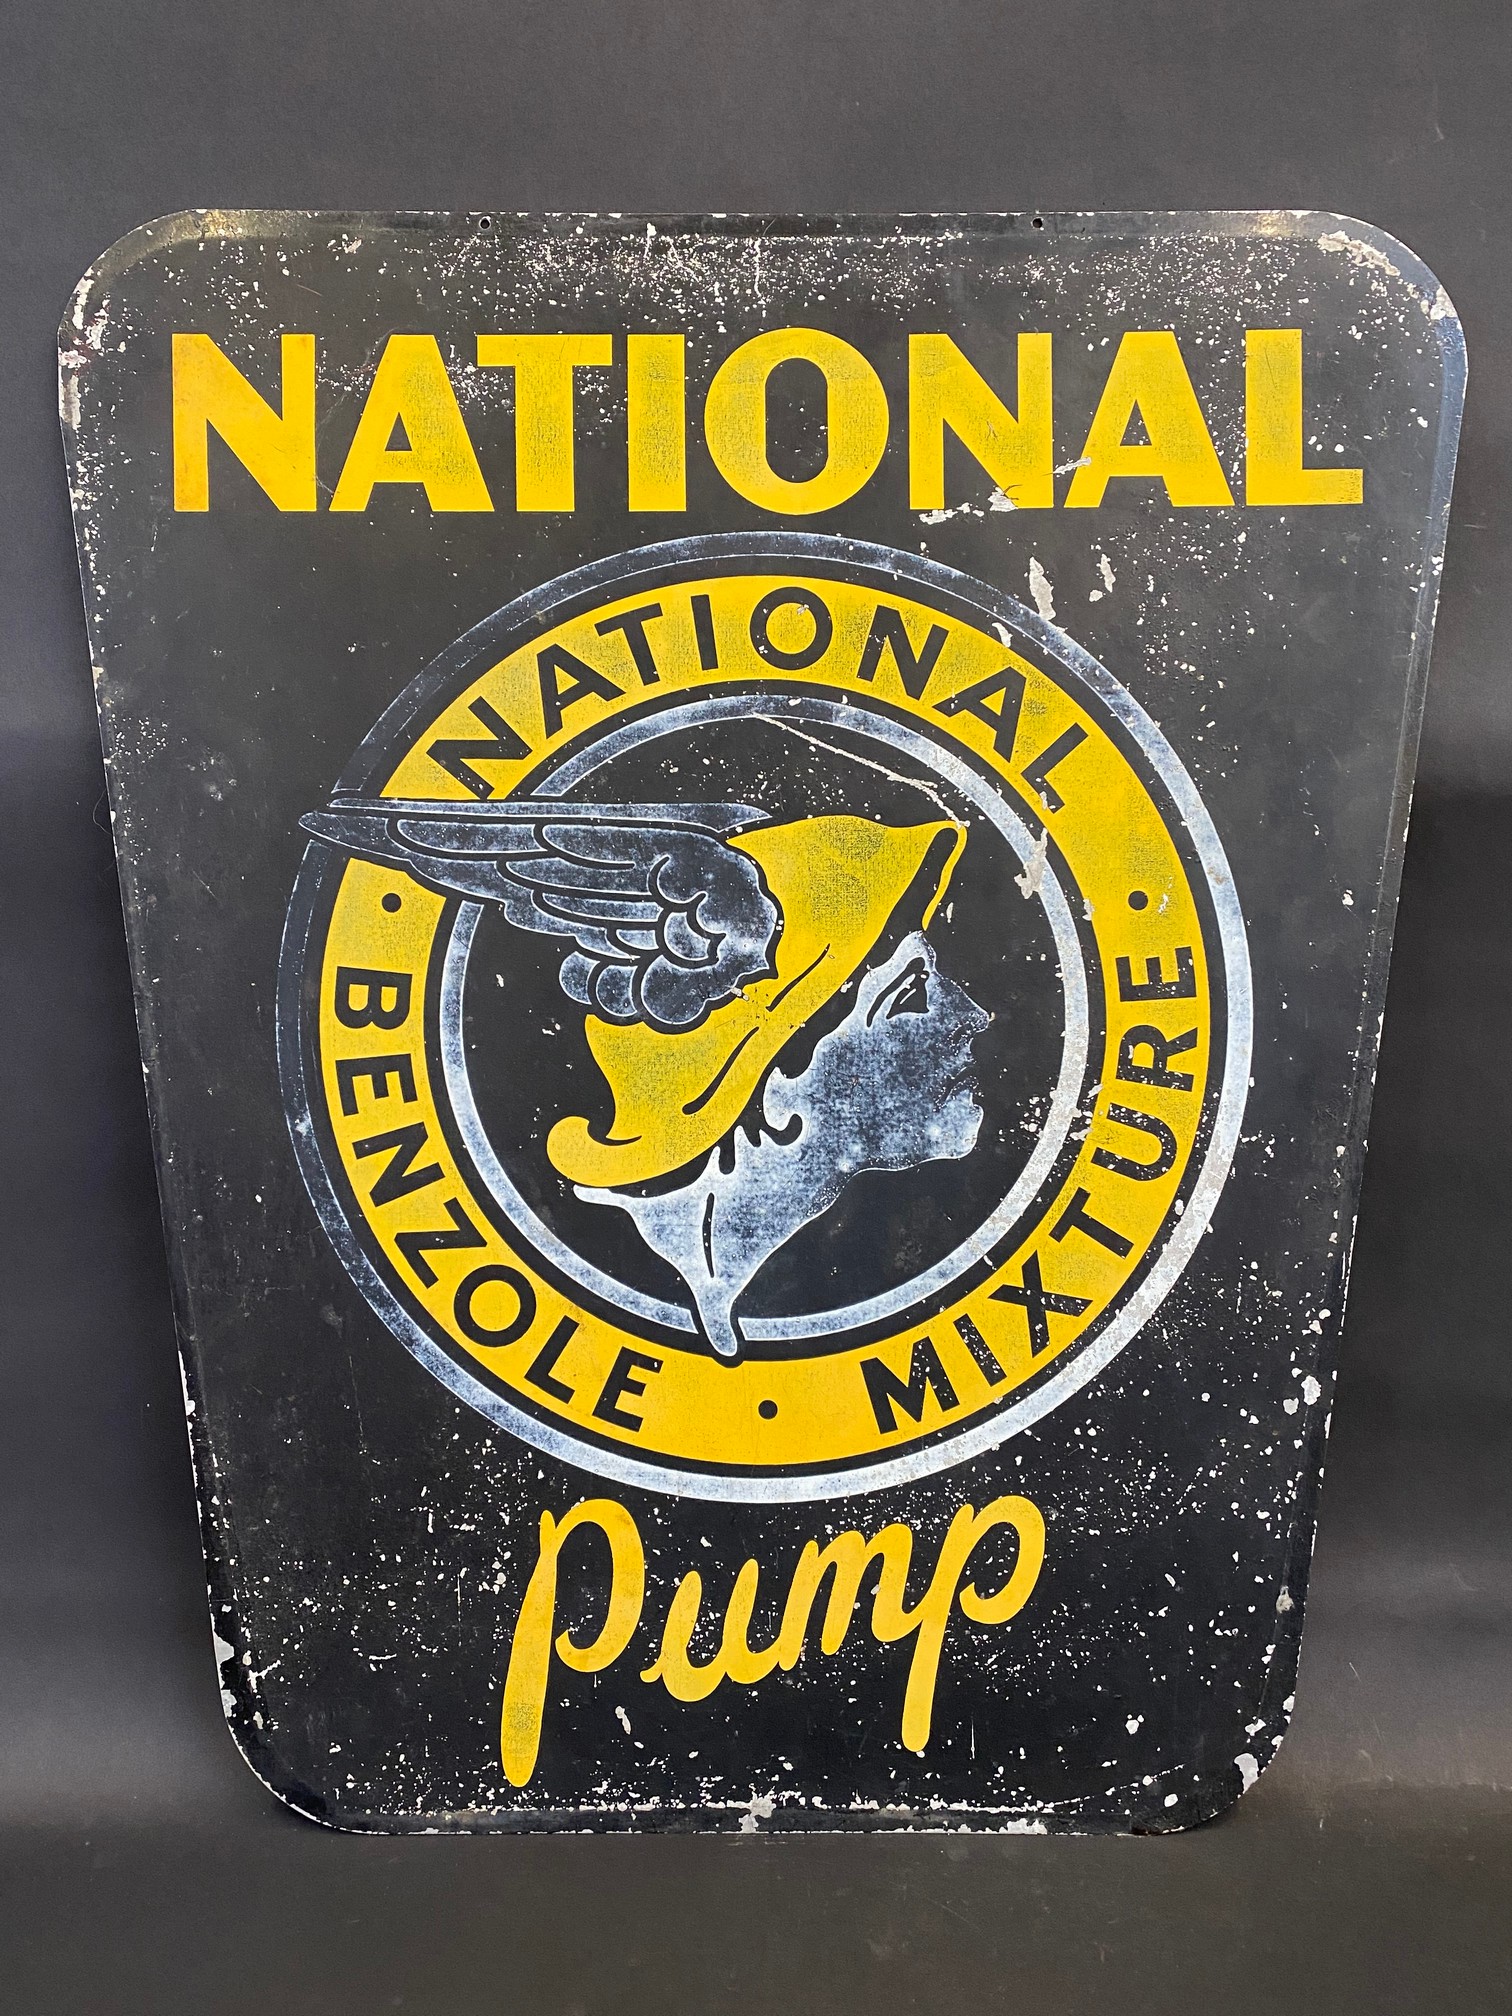 A National Benzole Mixture 'Pump' aluminium advertising sign, 25 1/2 x 30".